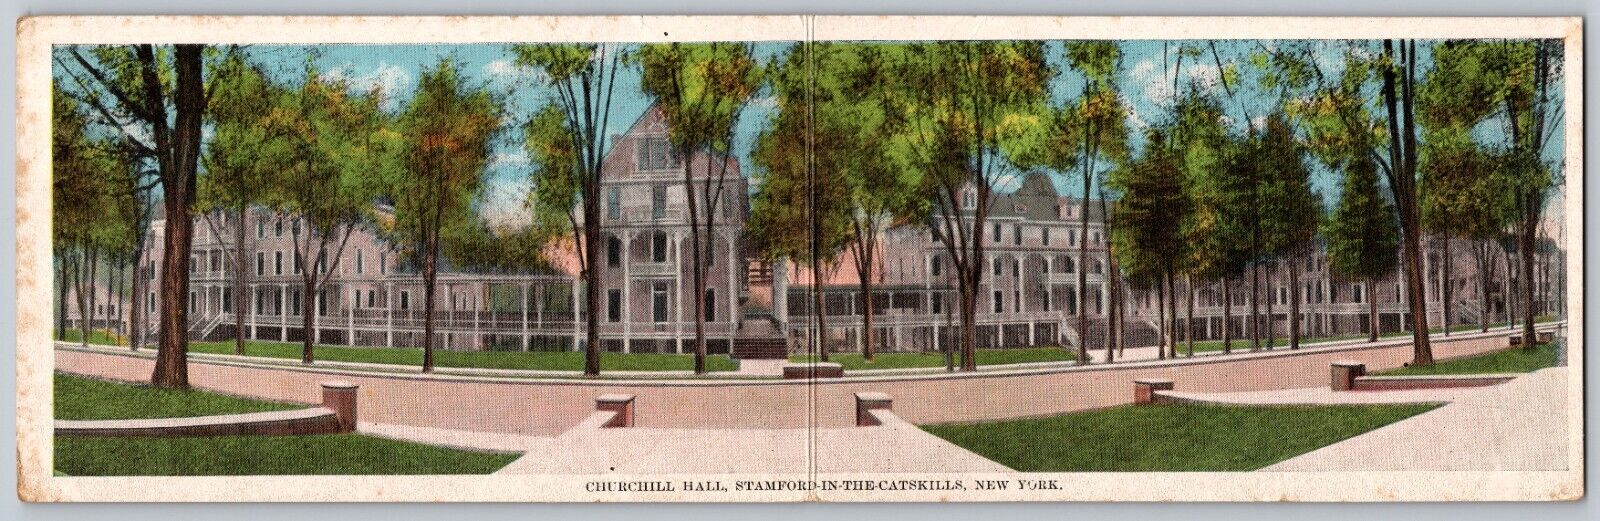 Churchill Hall Stamford-in-the-Catskills New York NY Panorama c1920 Postcard